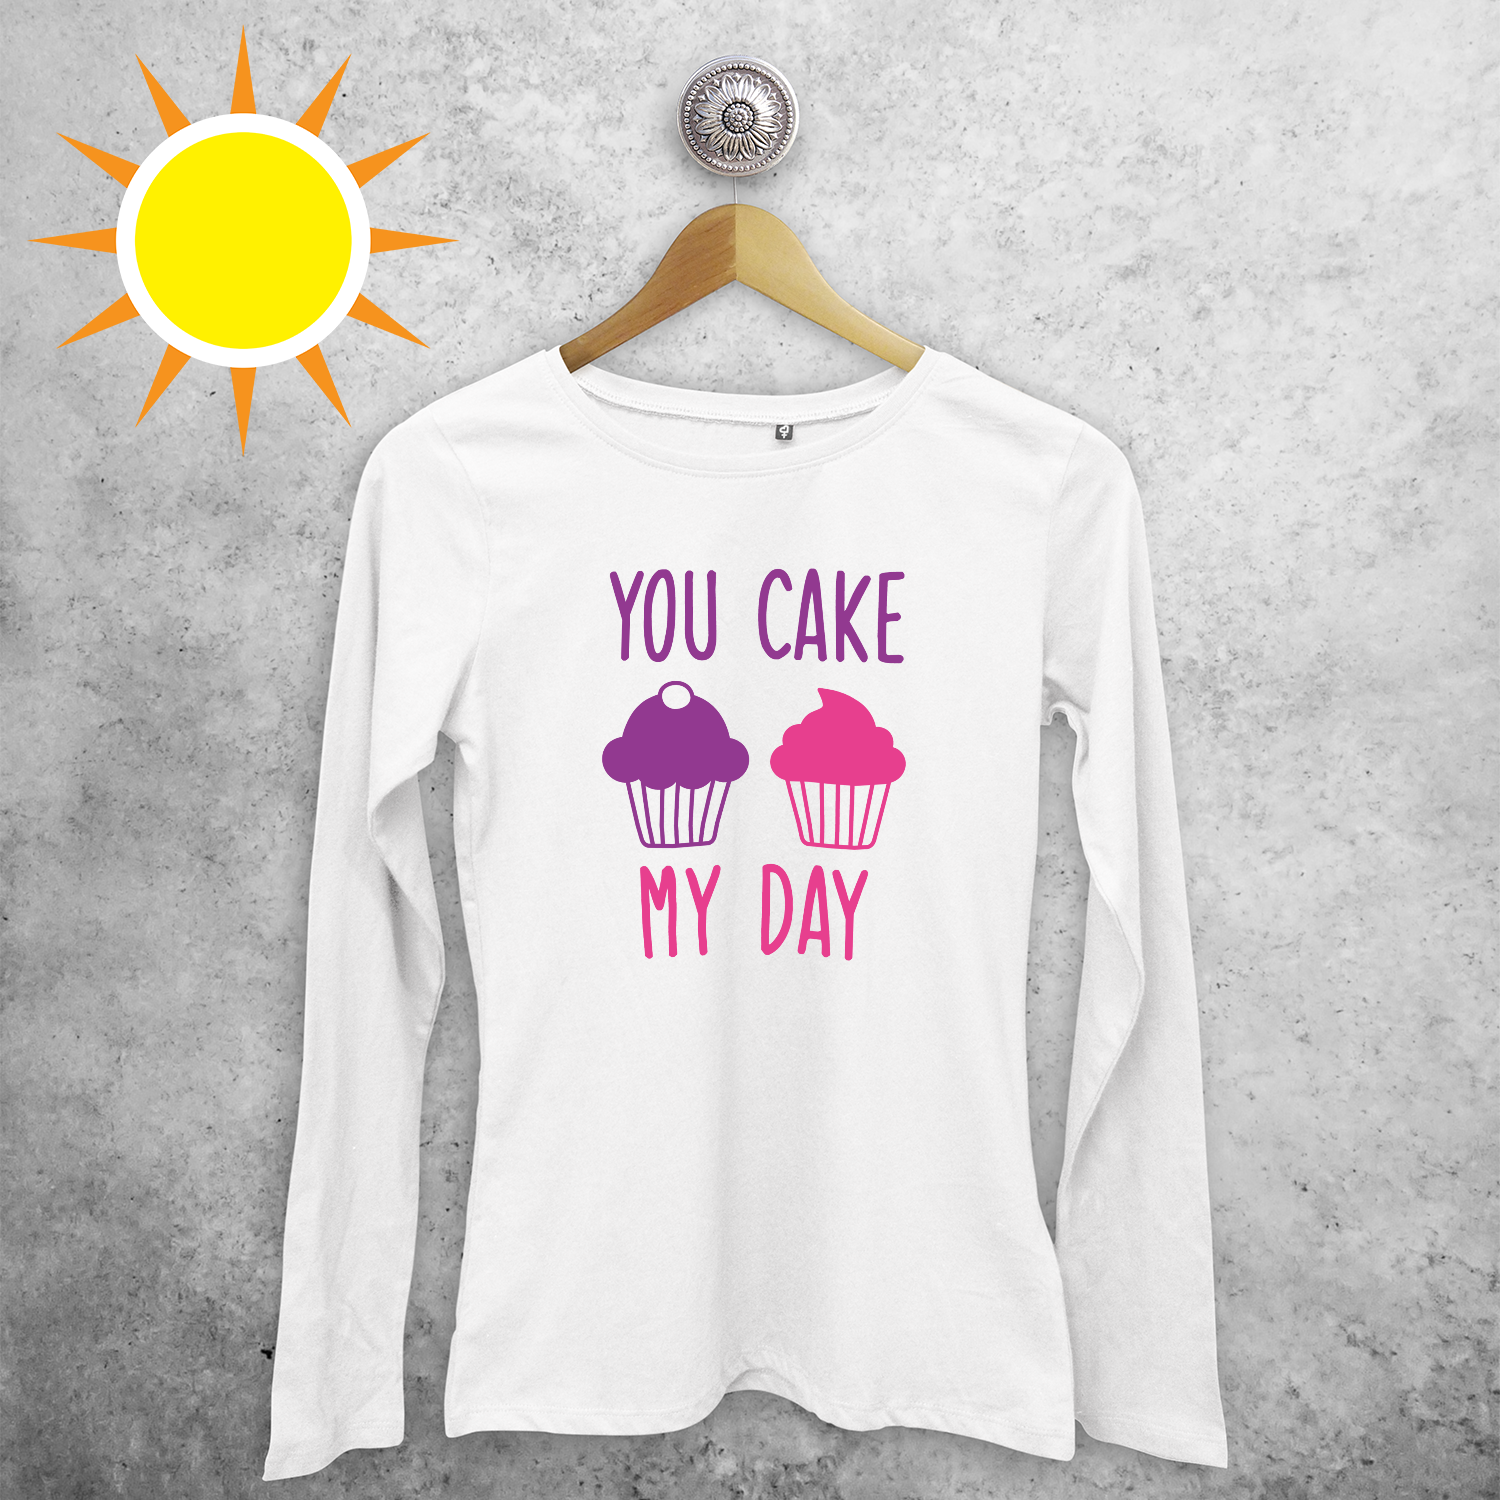 'You cake my day' magic adult longsleeve shirt